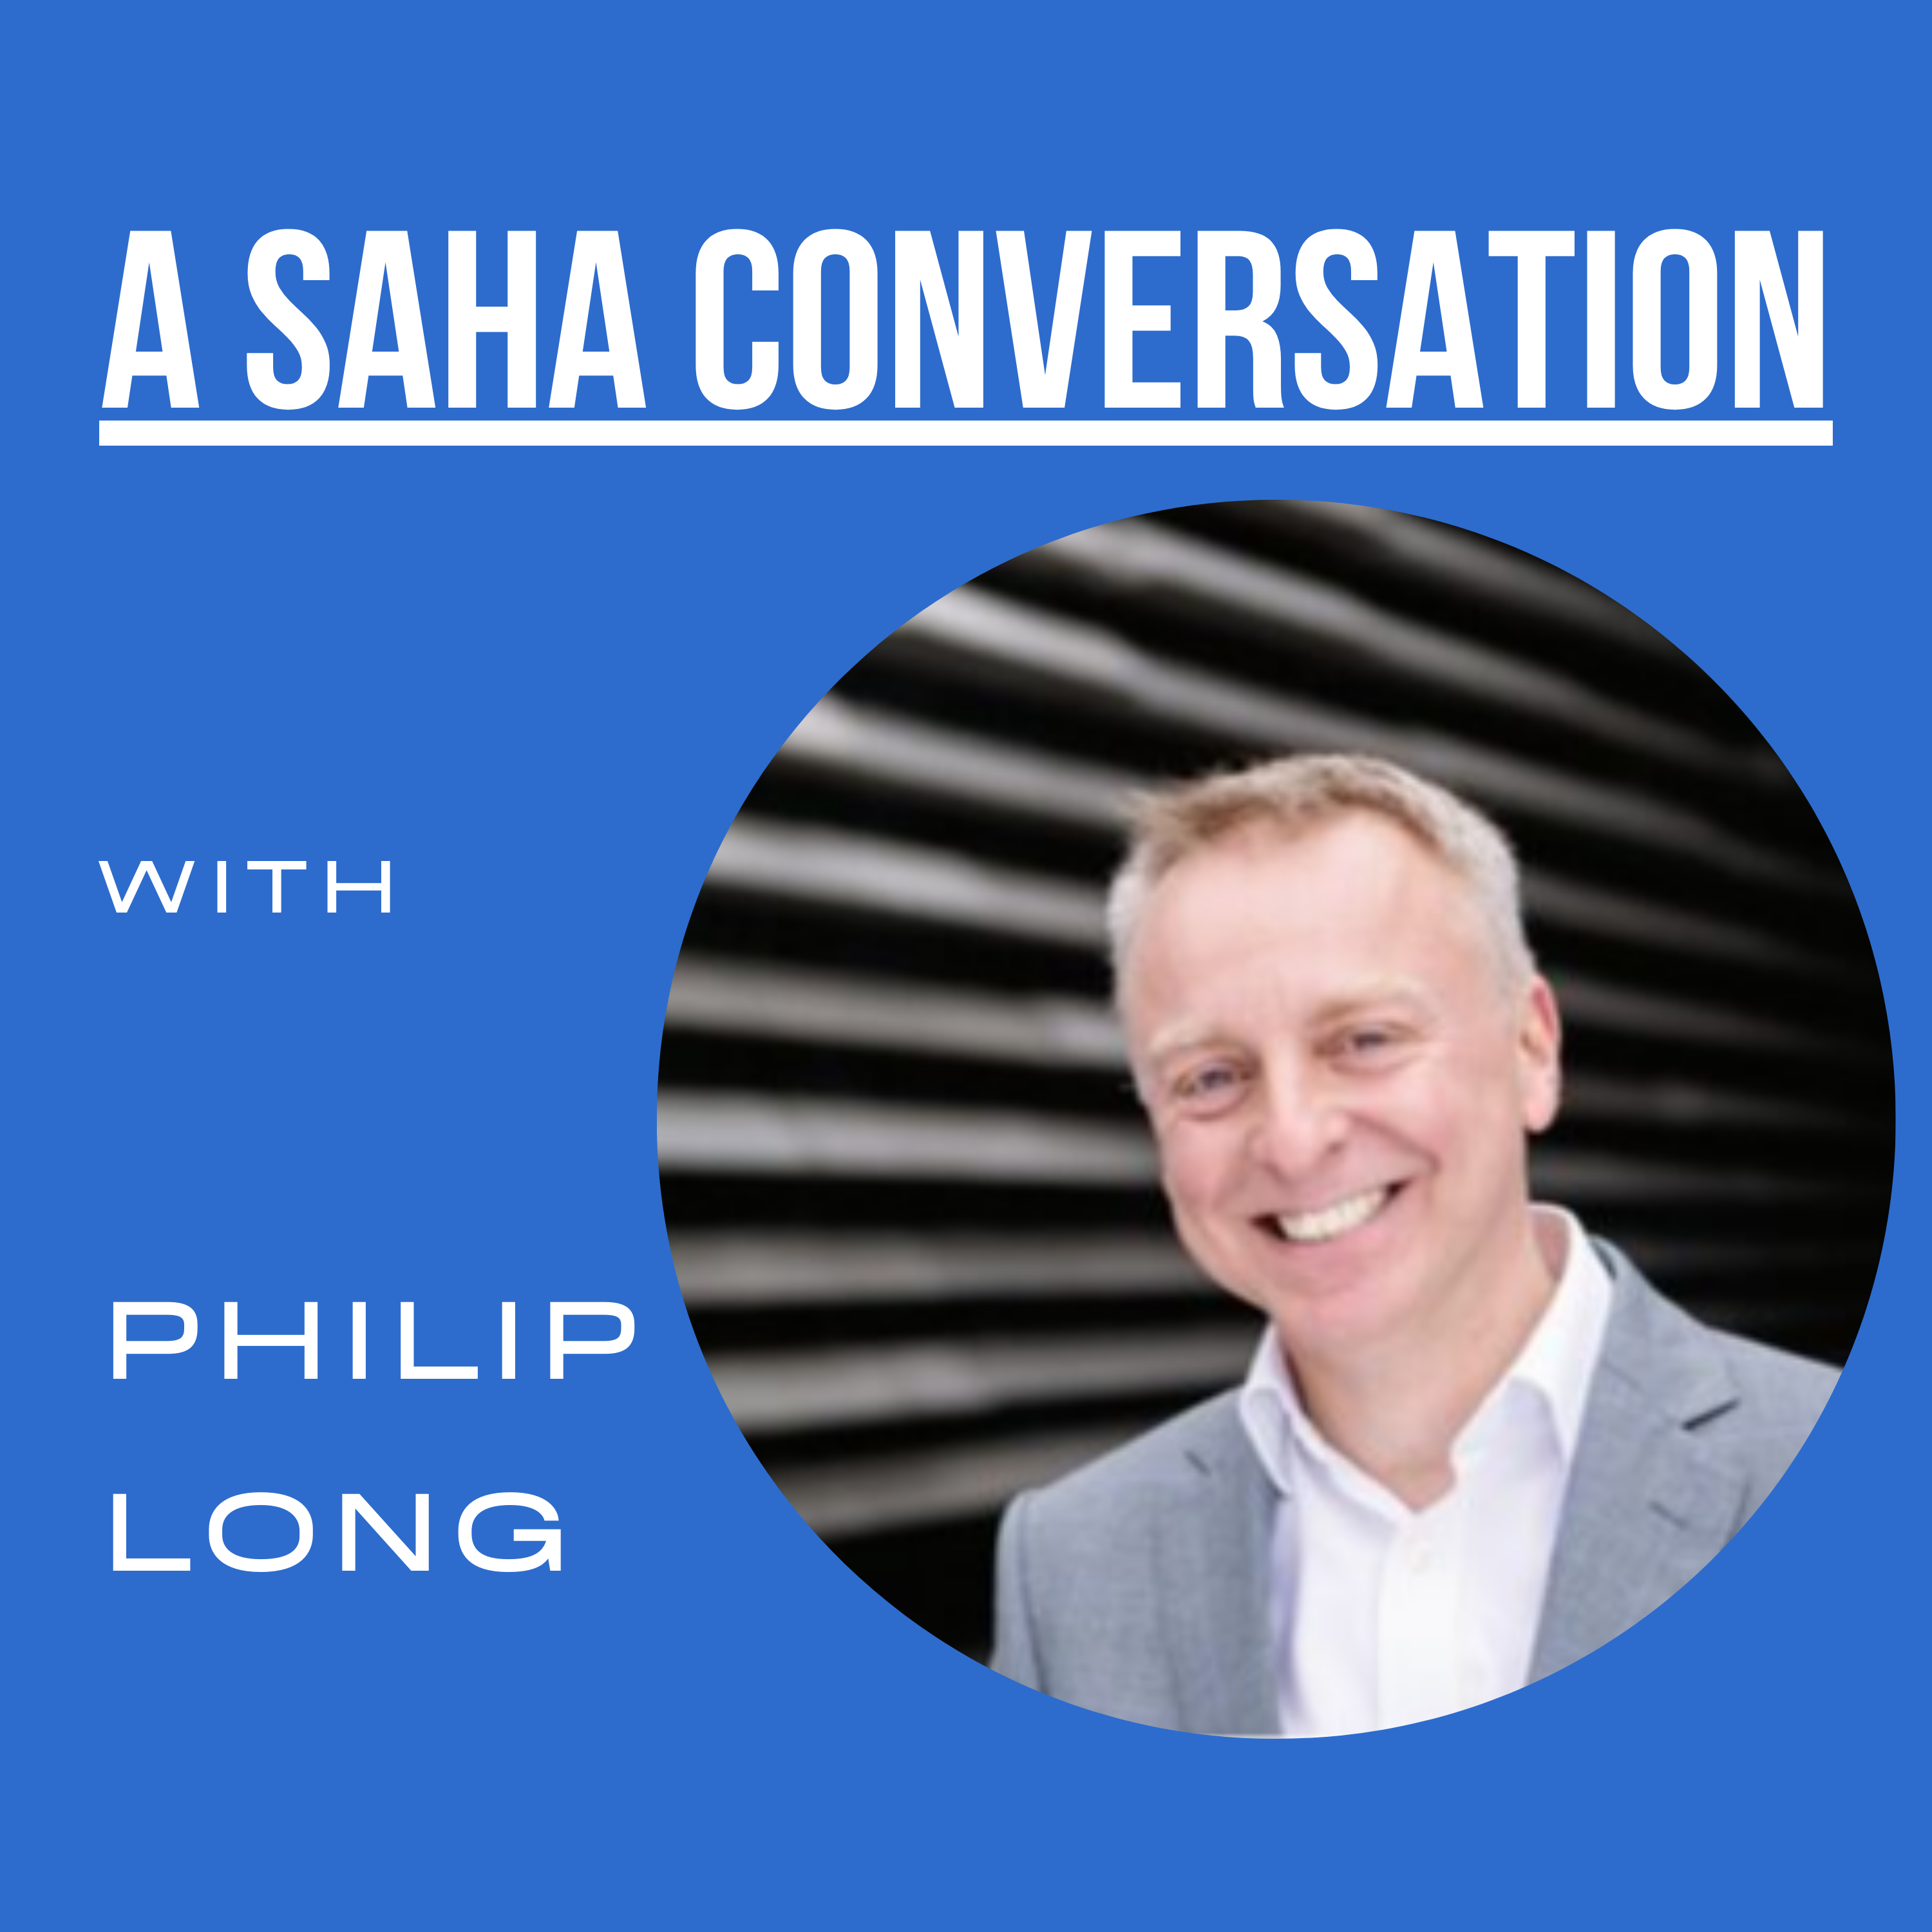 A SAHA Conversation with Philip Long